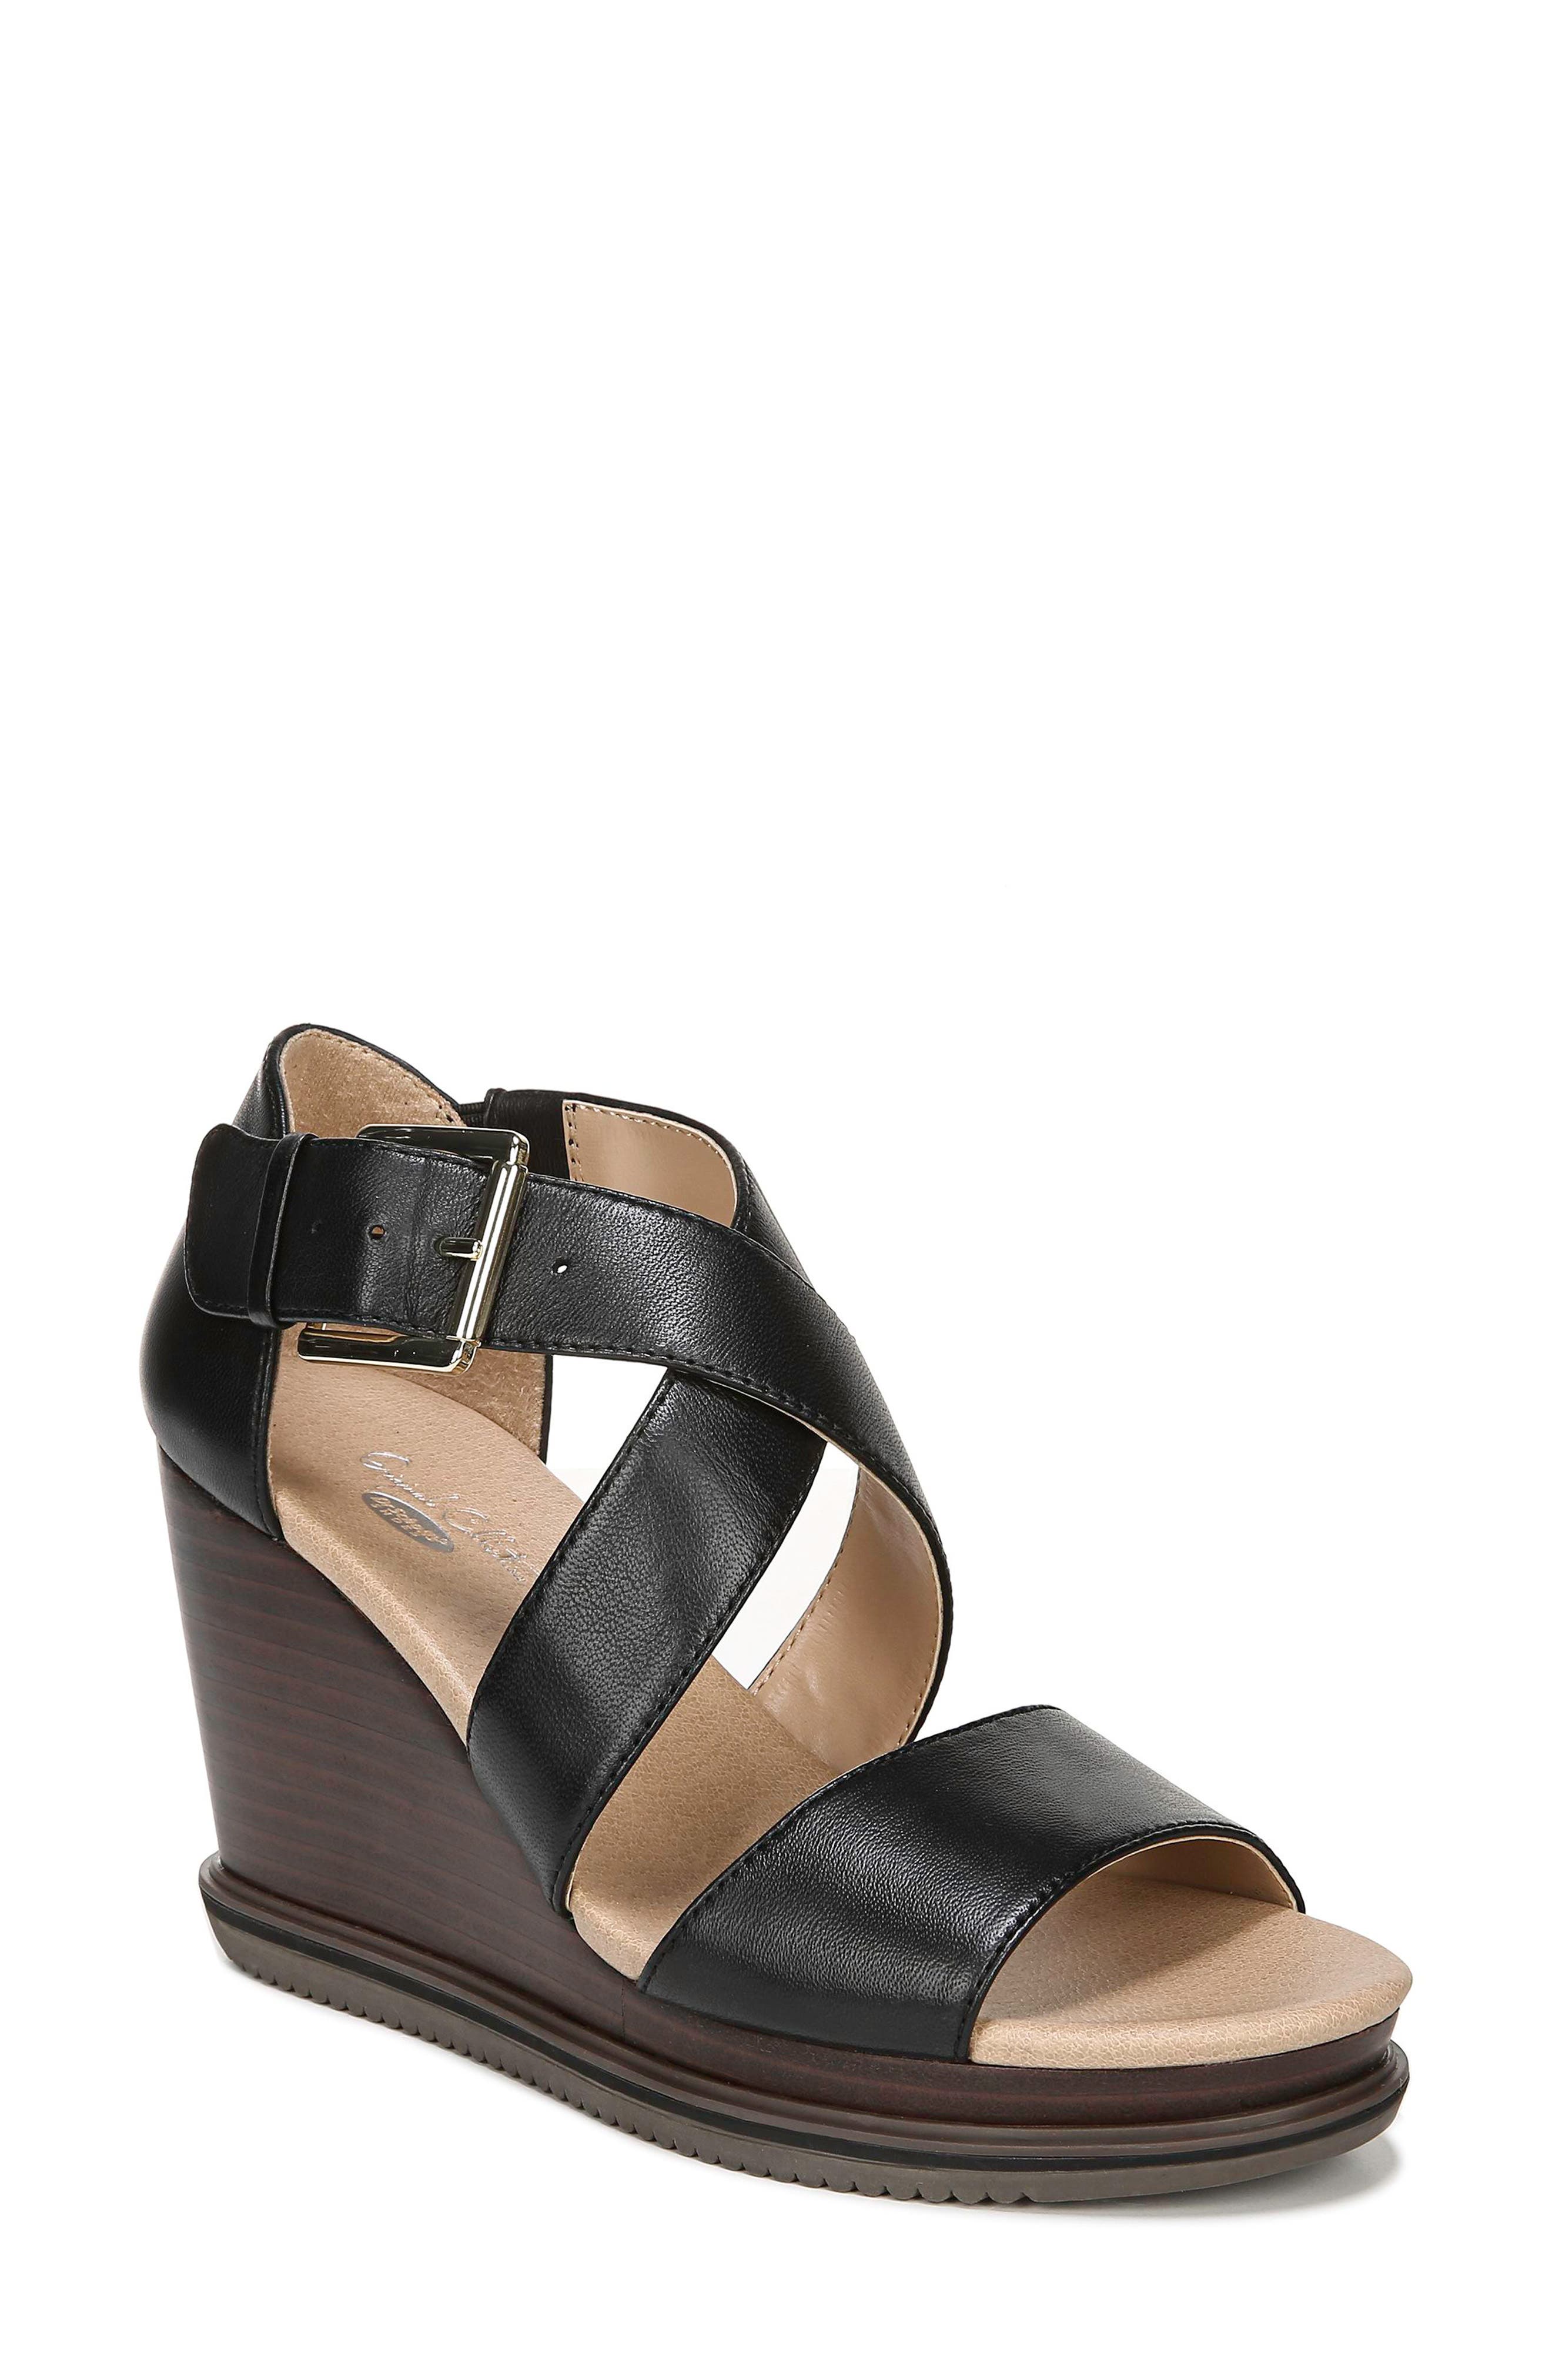 UPC 742976000027 product image for Women's Dr. Scholl'S Sweet Escape Wedge Sandal, Size 10 M - Black | upcitemdb.com